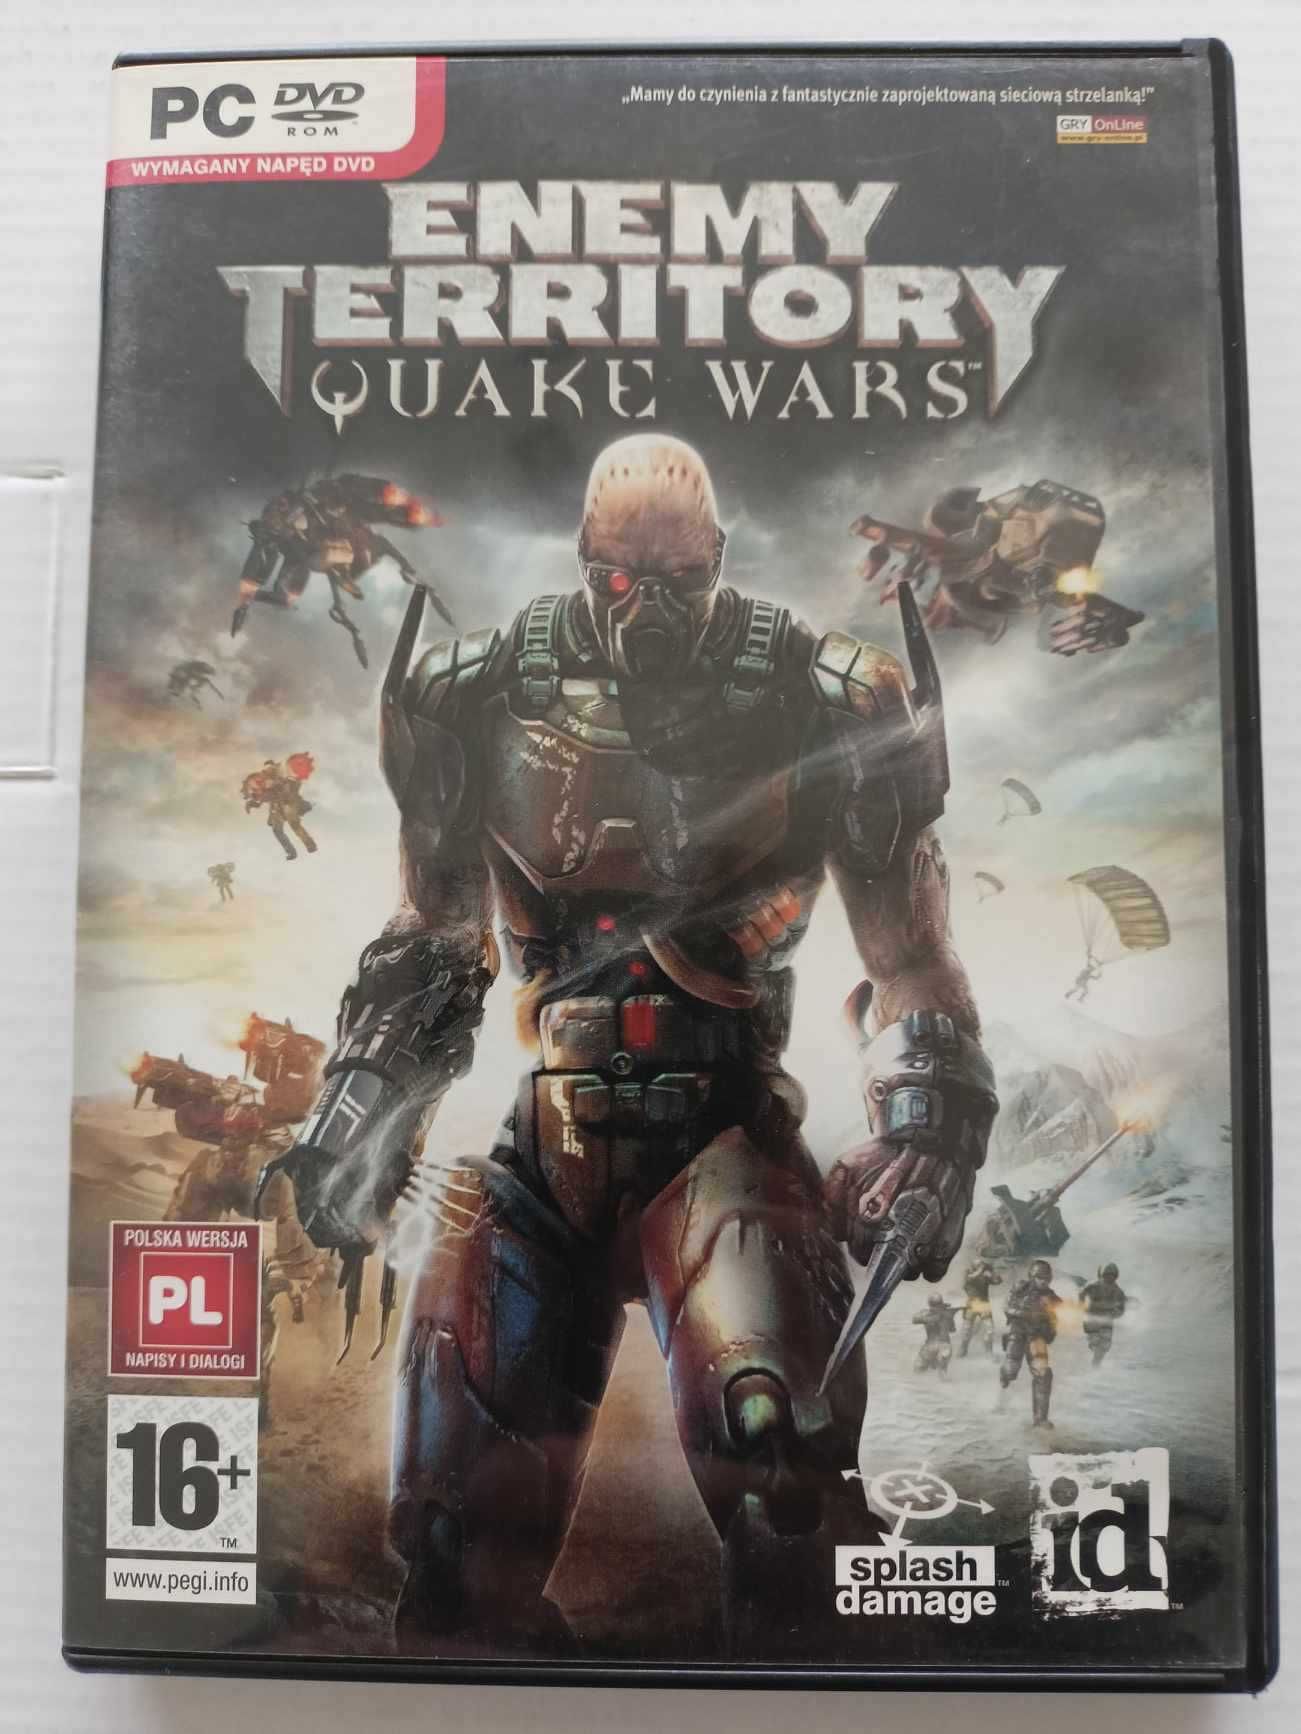 Enemy Territory: Quake Wars PC